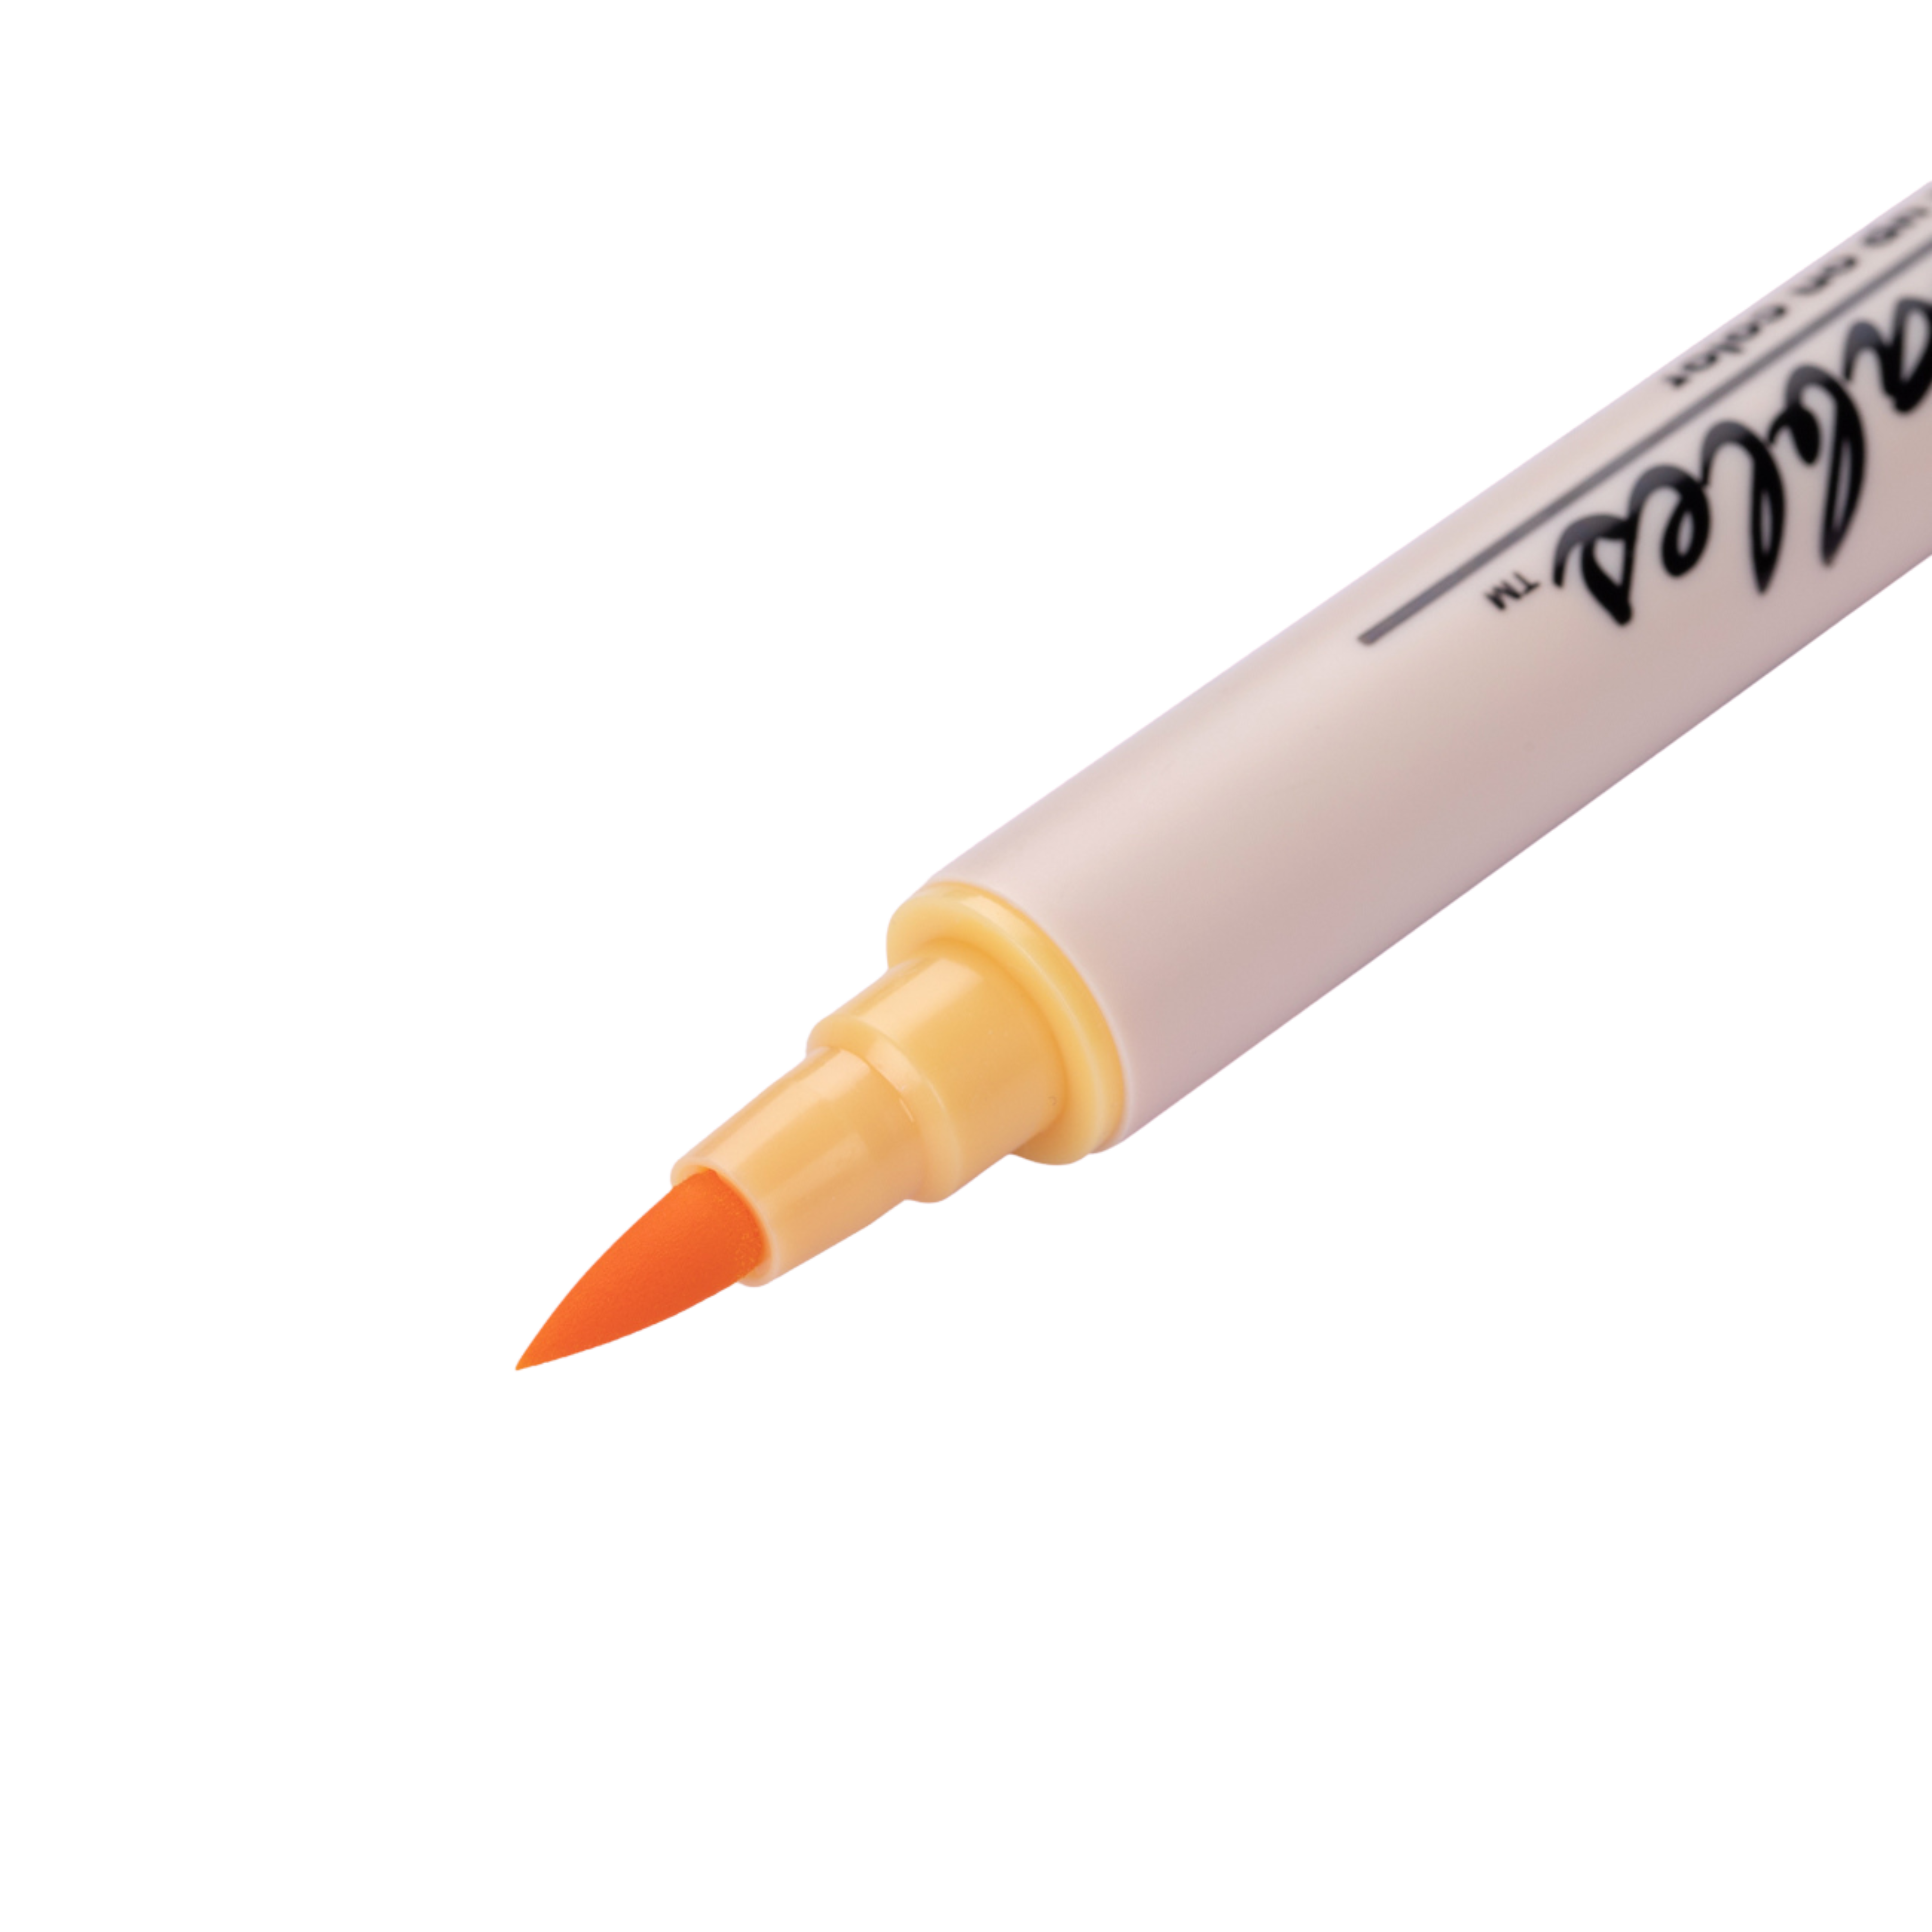 Kuretake Zig Brushables Brush Pen - Apricot 052